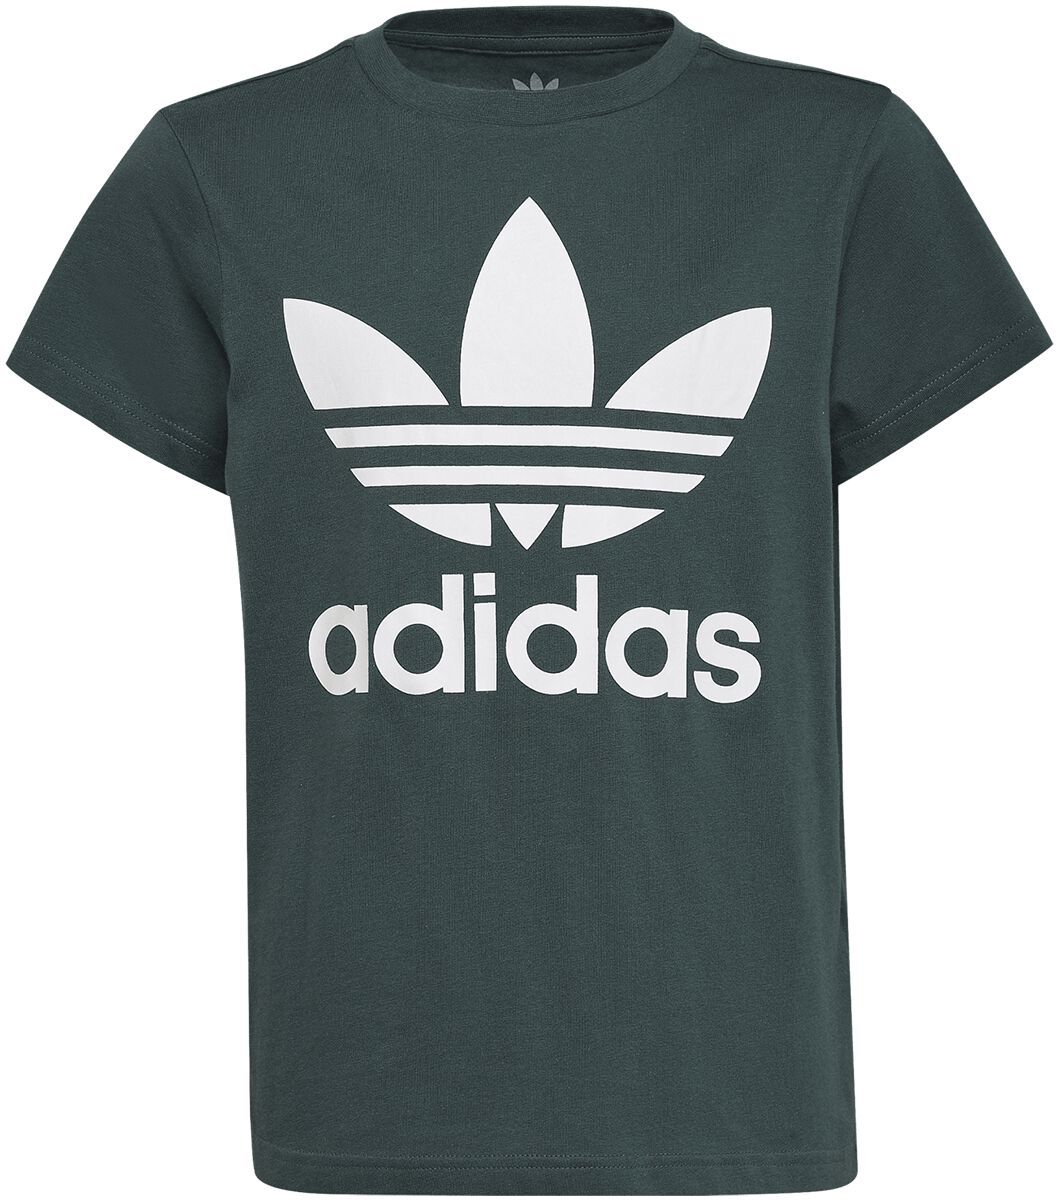 Adidas Trefoil Tee T-Shirt green